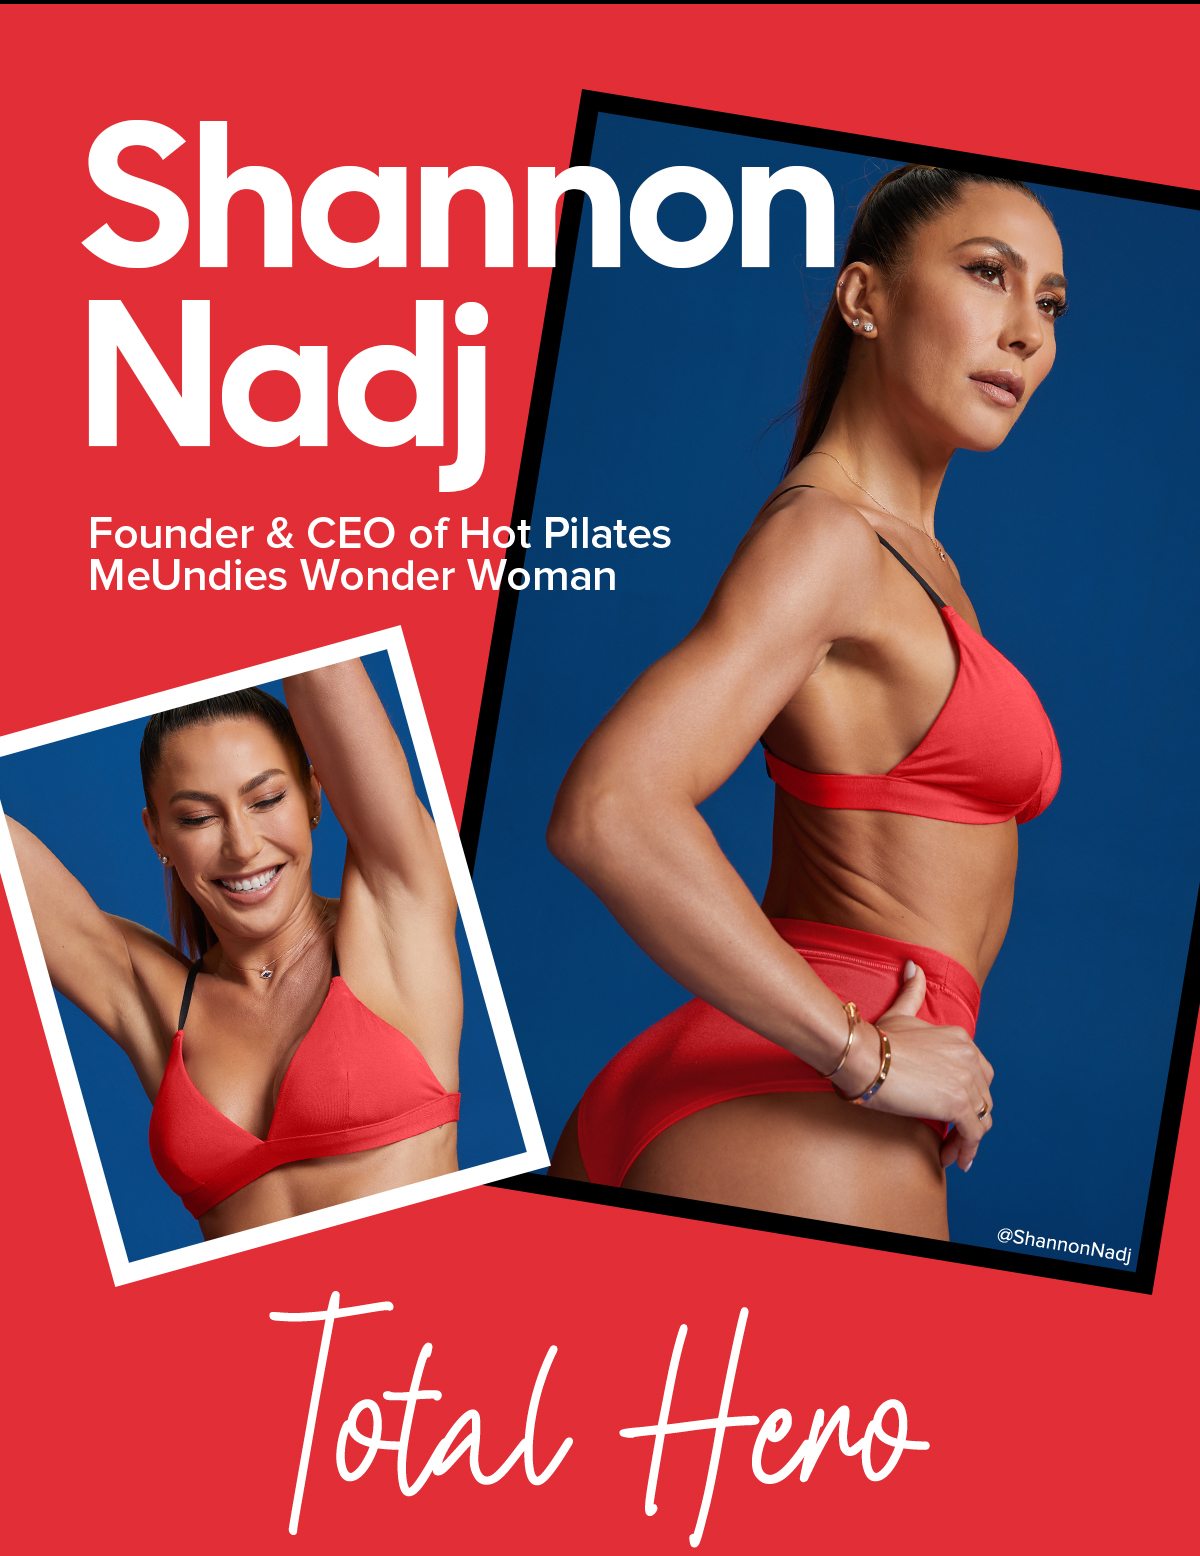 Shannon Nadj Founder & CEO of Hot Pilates MeUndies Wonder Woman